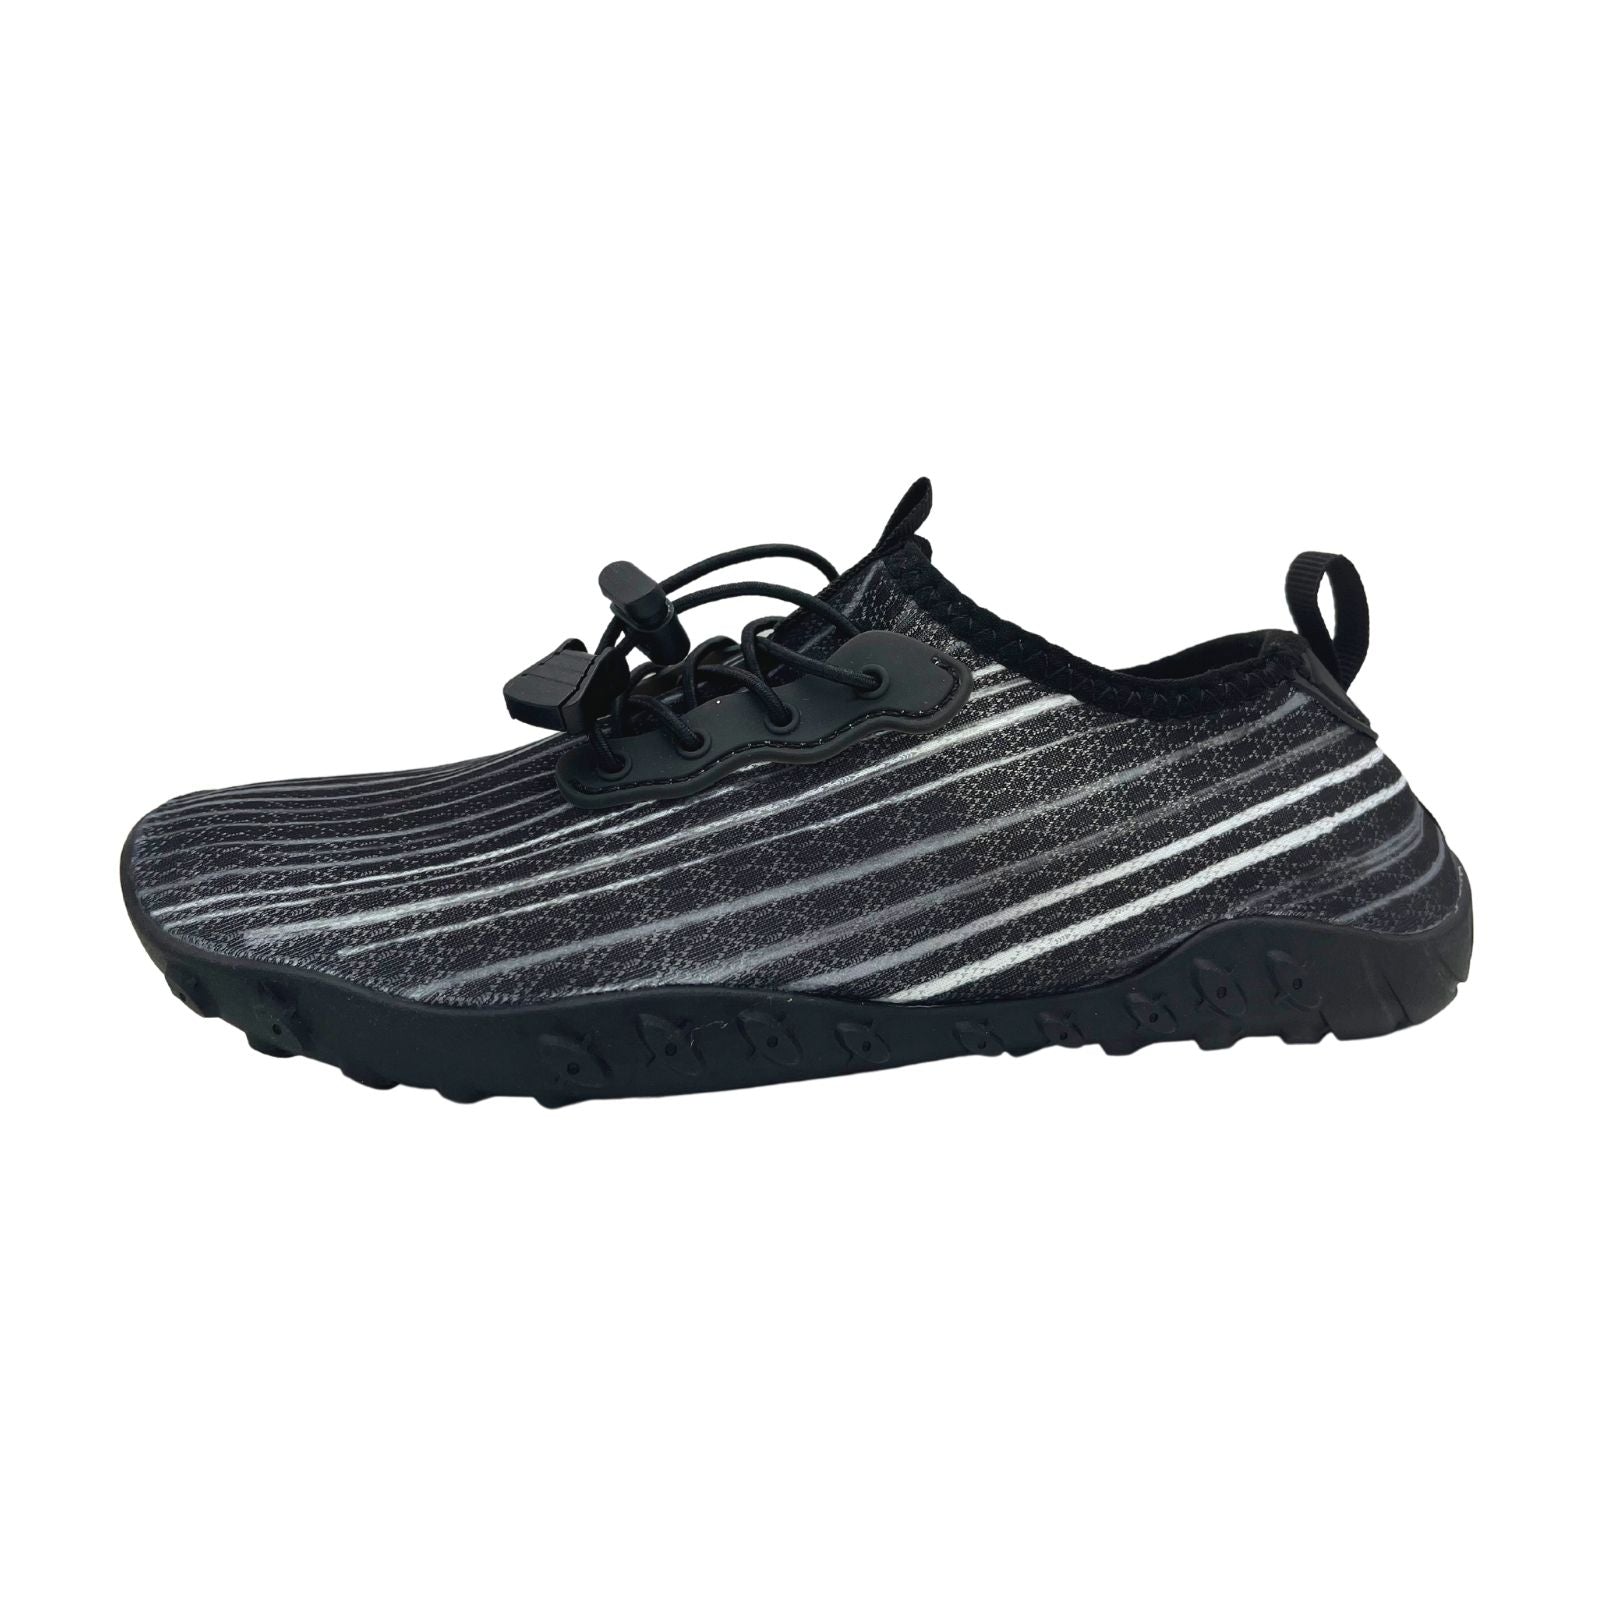 Water Shoes for Men and Women Soft Breathable Slip-on Aqua Shoes Aqua Socks for Swim Beach Pool Surf Yoga (Black Size US 7.5)